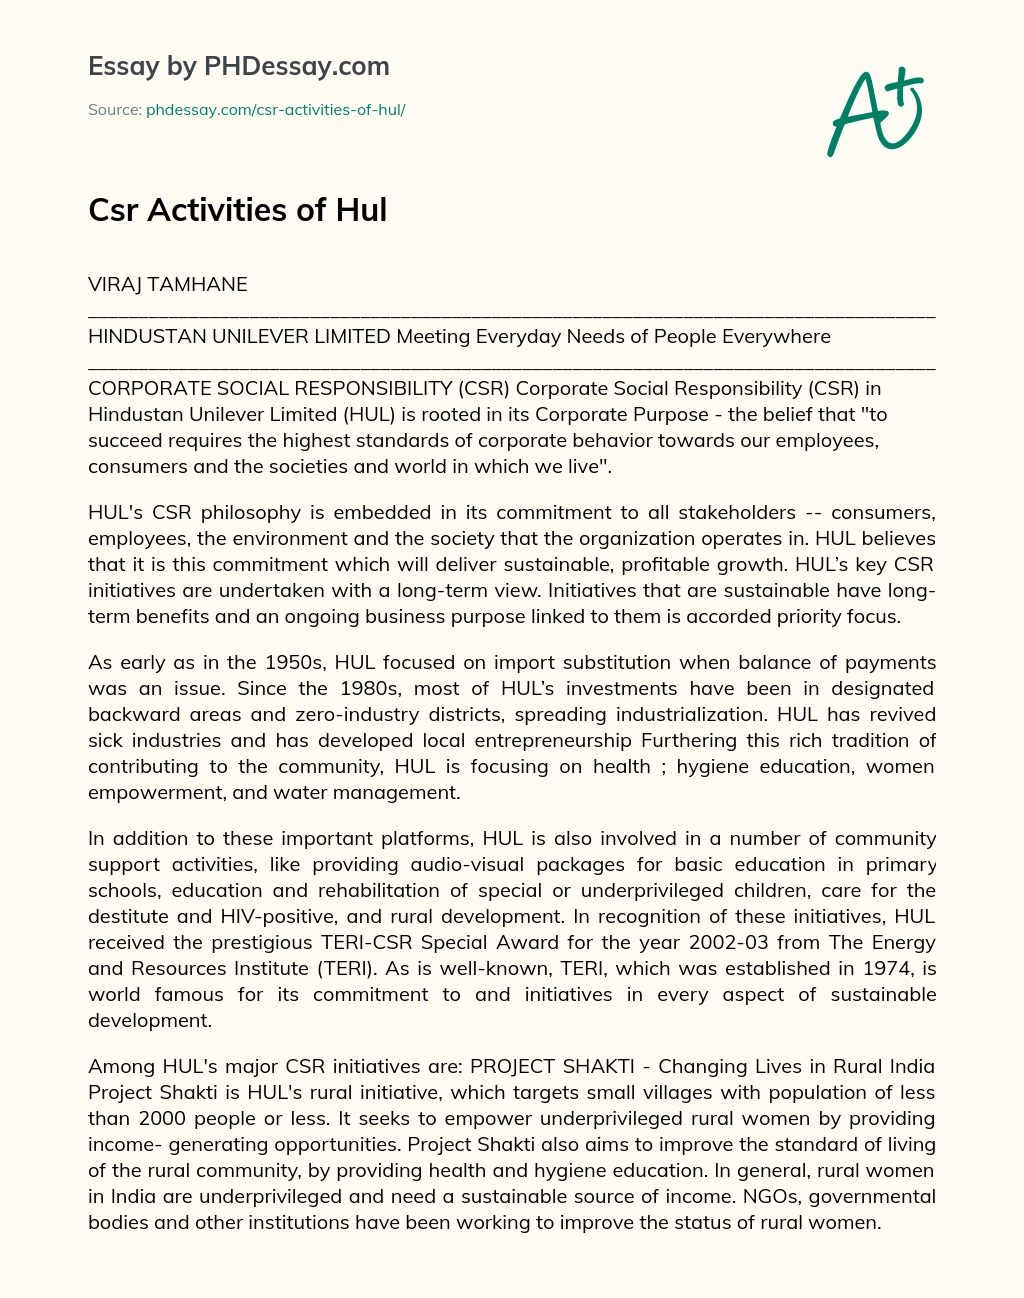 Csr Activities of Hul essay